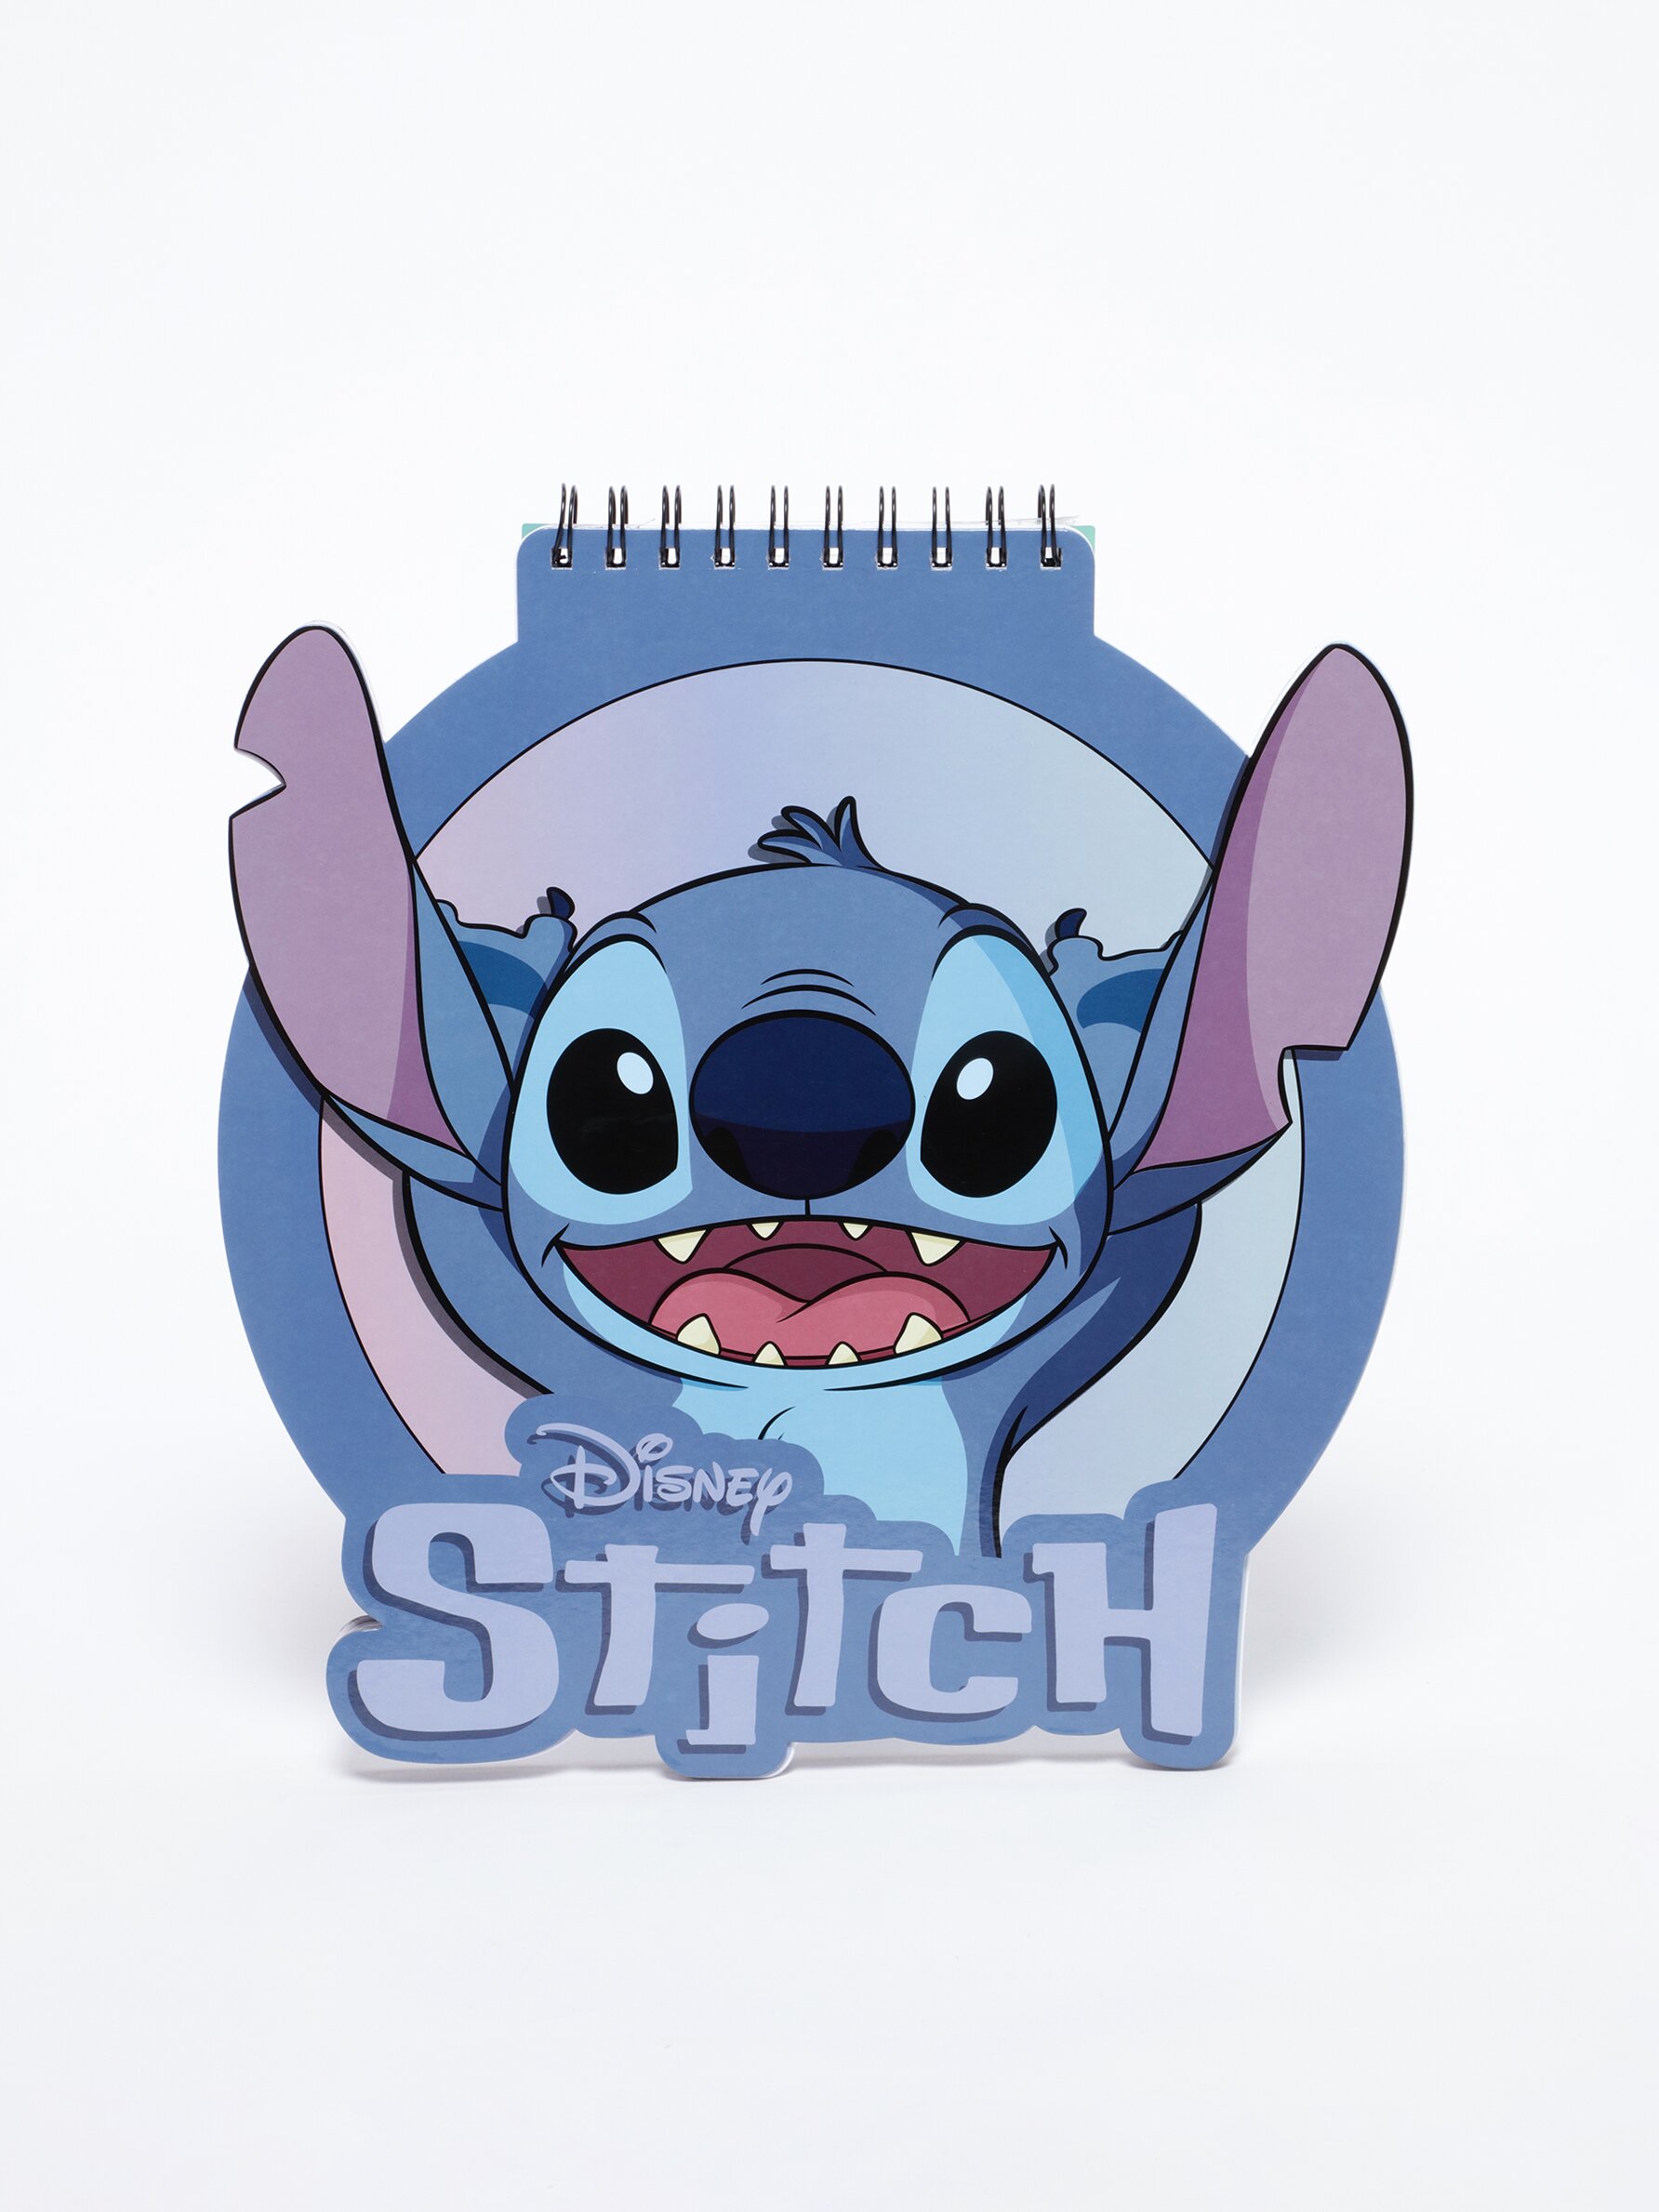 Lilo & Stitch ©Disney pencils and stickers set - Cartoons